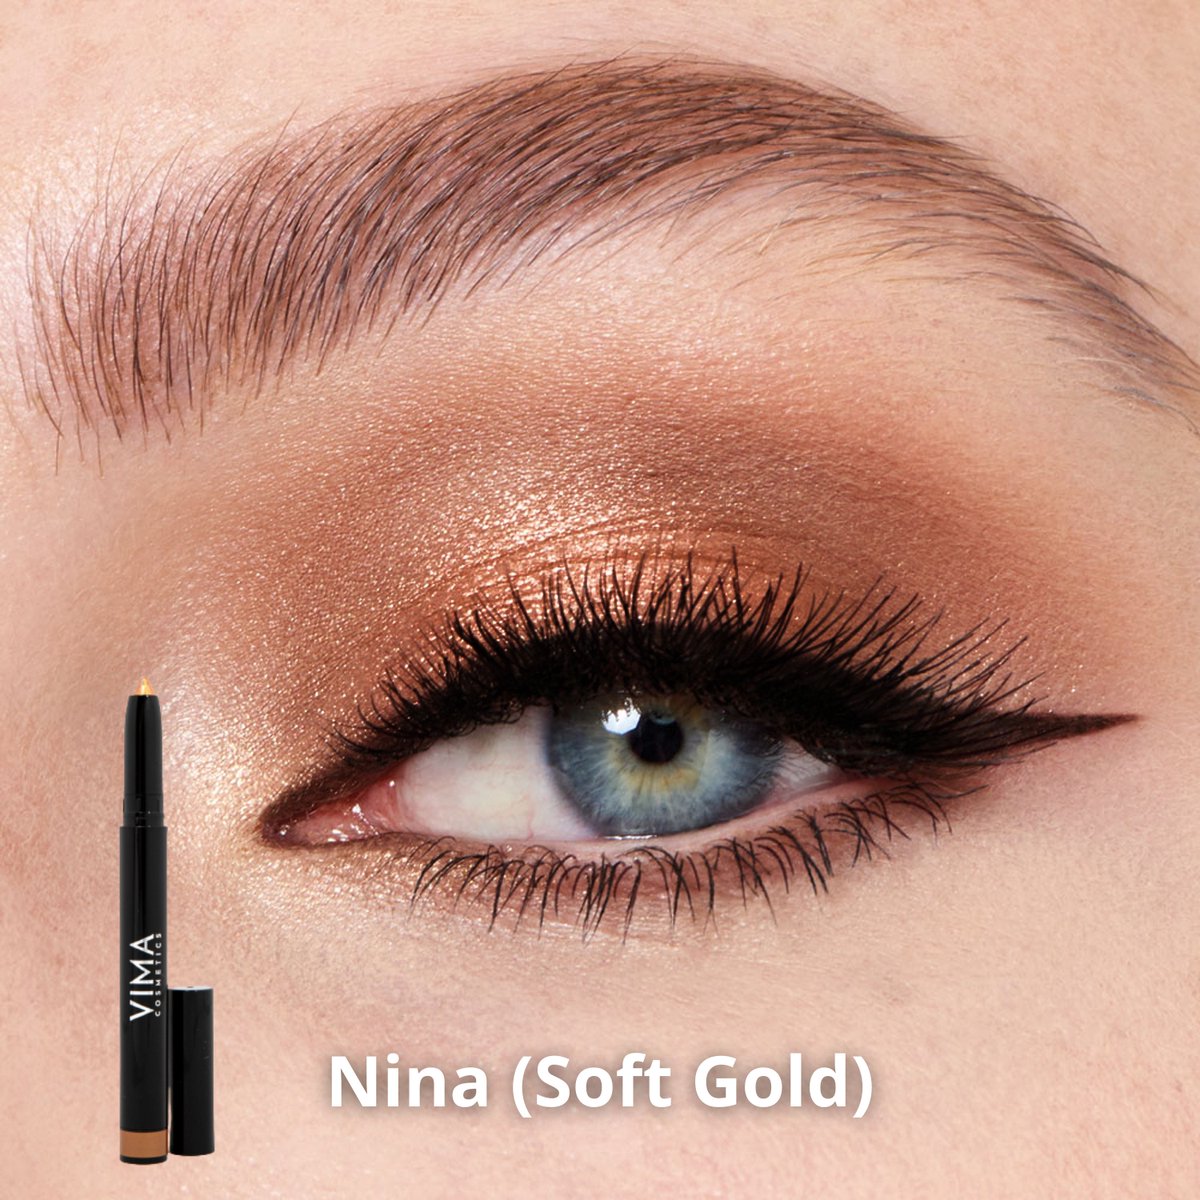 VIMA Eyeshadow stick - Soft Gold (Nina) - Long-Lasting - High Pigmentation - Waterproof